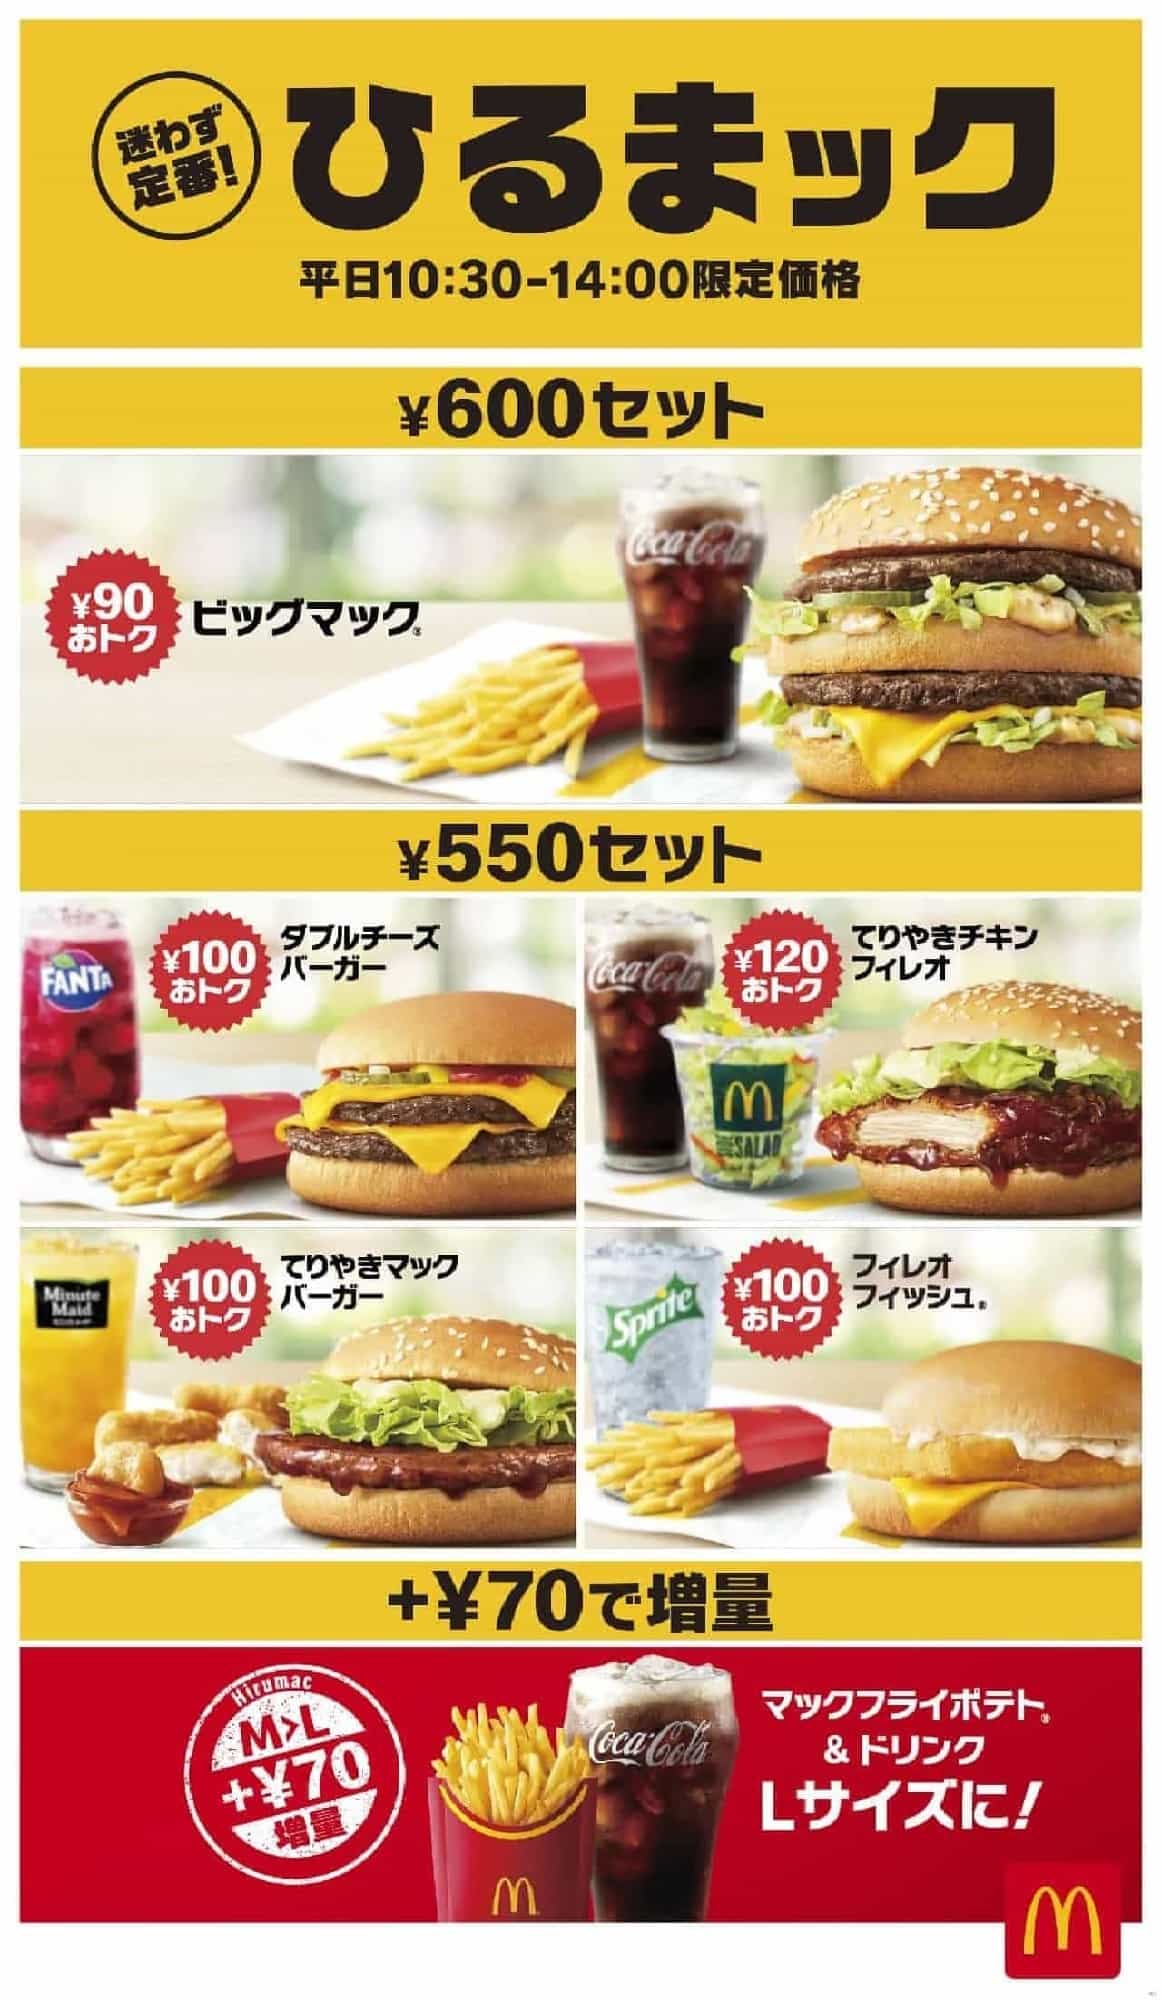 McDonald's "Hirumakku" 